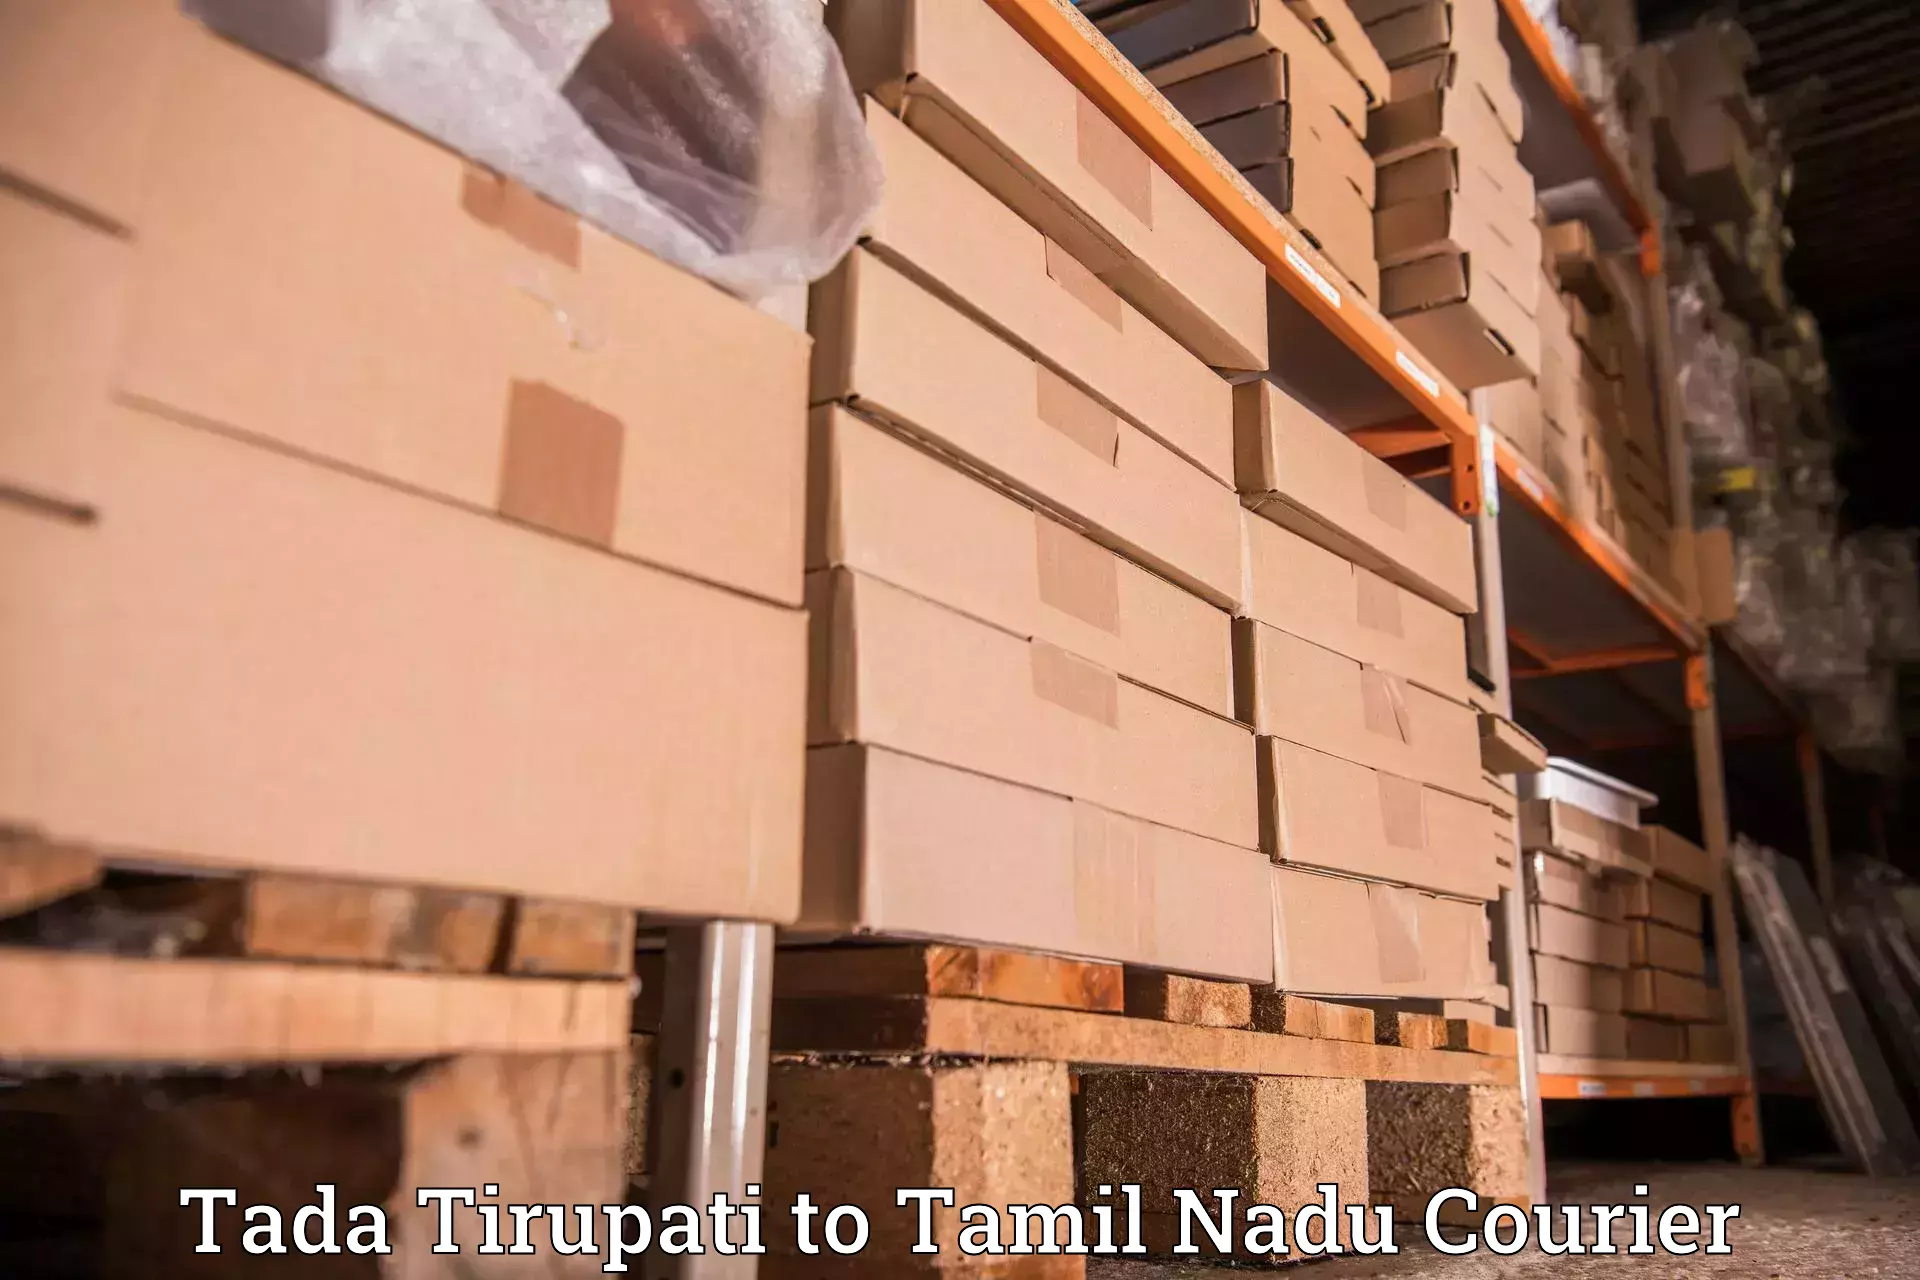 Courier service comparison Tada Tirupati to Ambattur